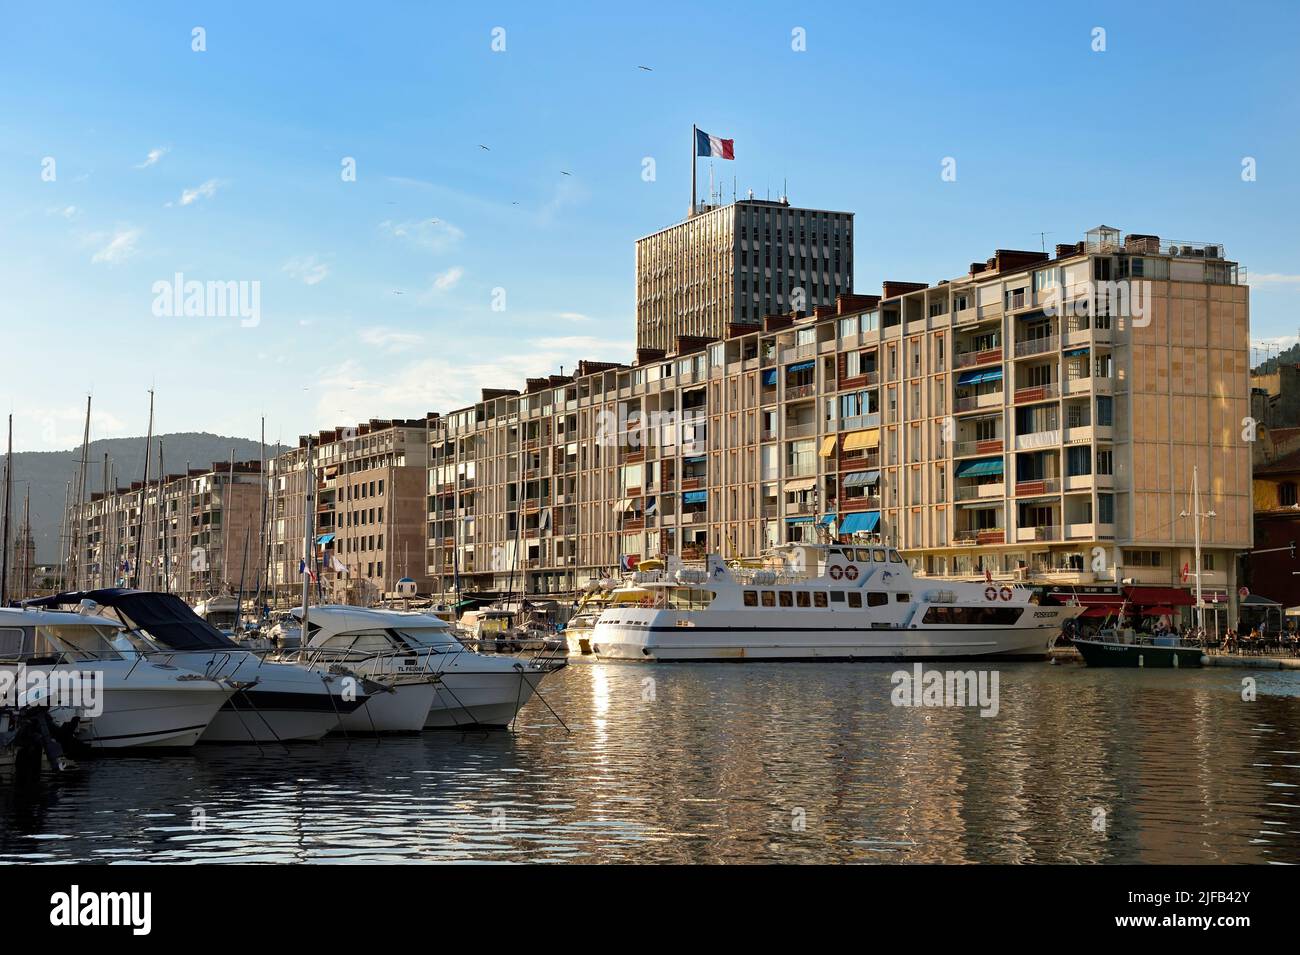 France, Var, Toulon, quai Kronstadt, the apartment blocks La Frontale designed by De Mailly following the 1944 bombing Stock Photo